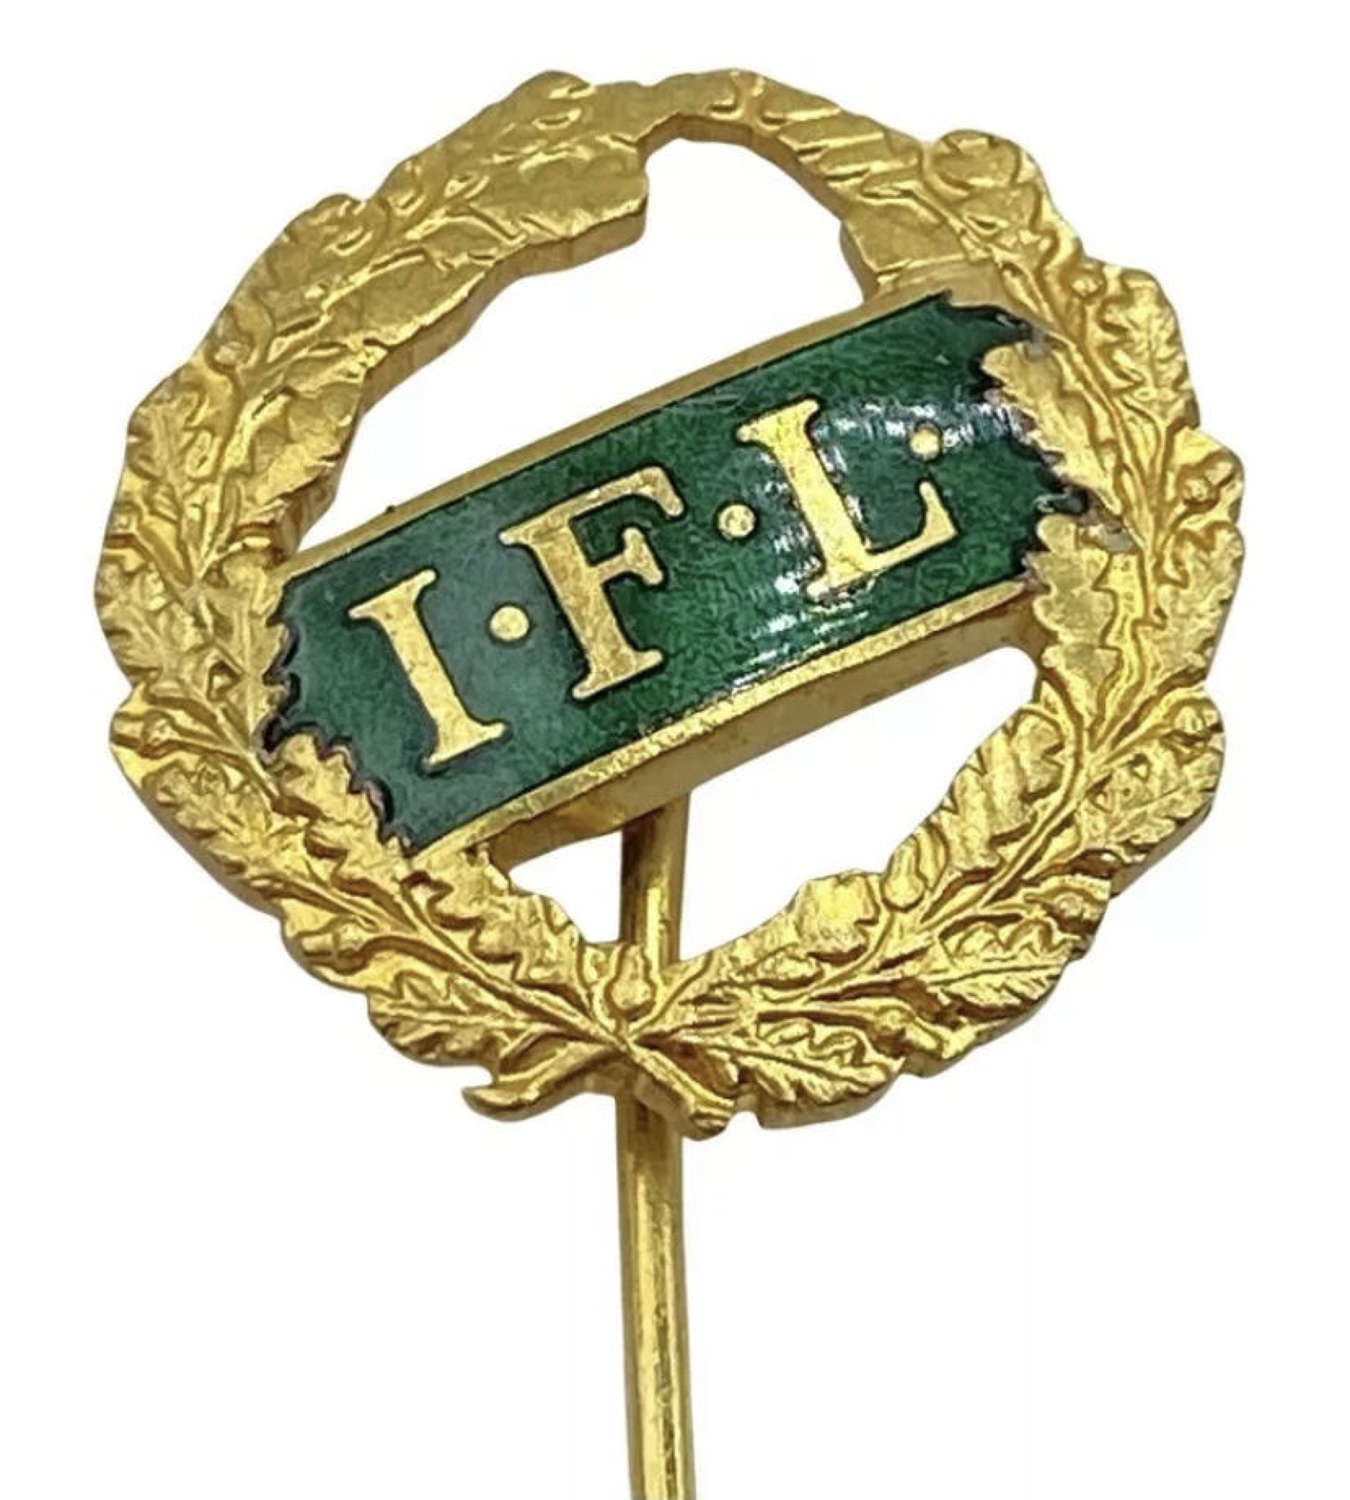 WW2 1930s Period (IFL) International Friendship League Stick Pin